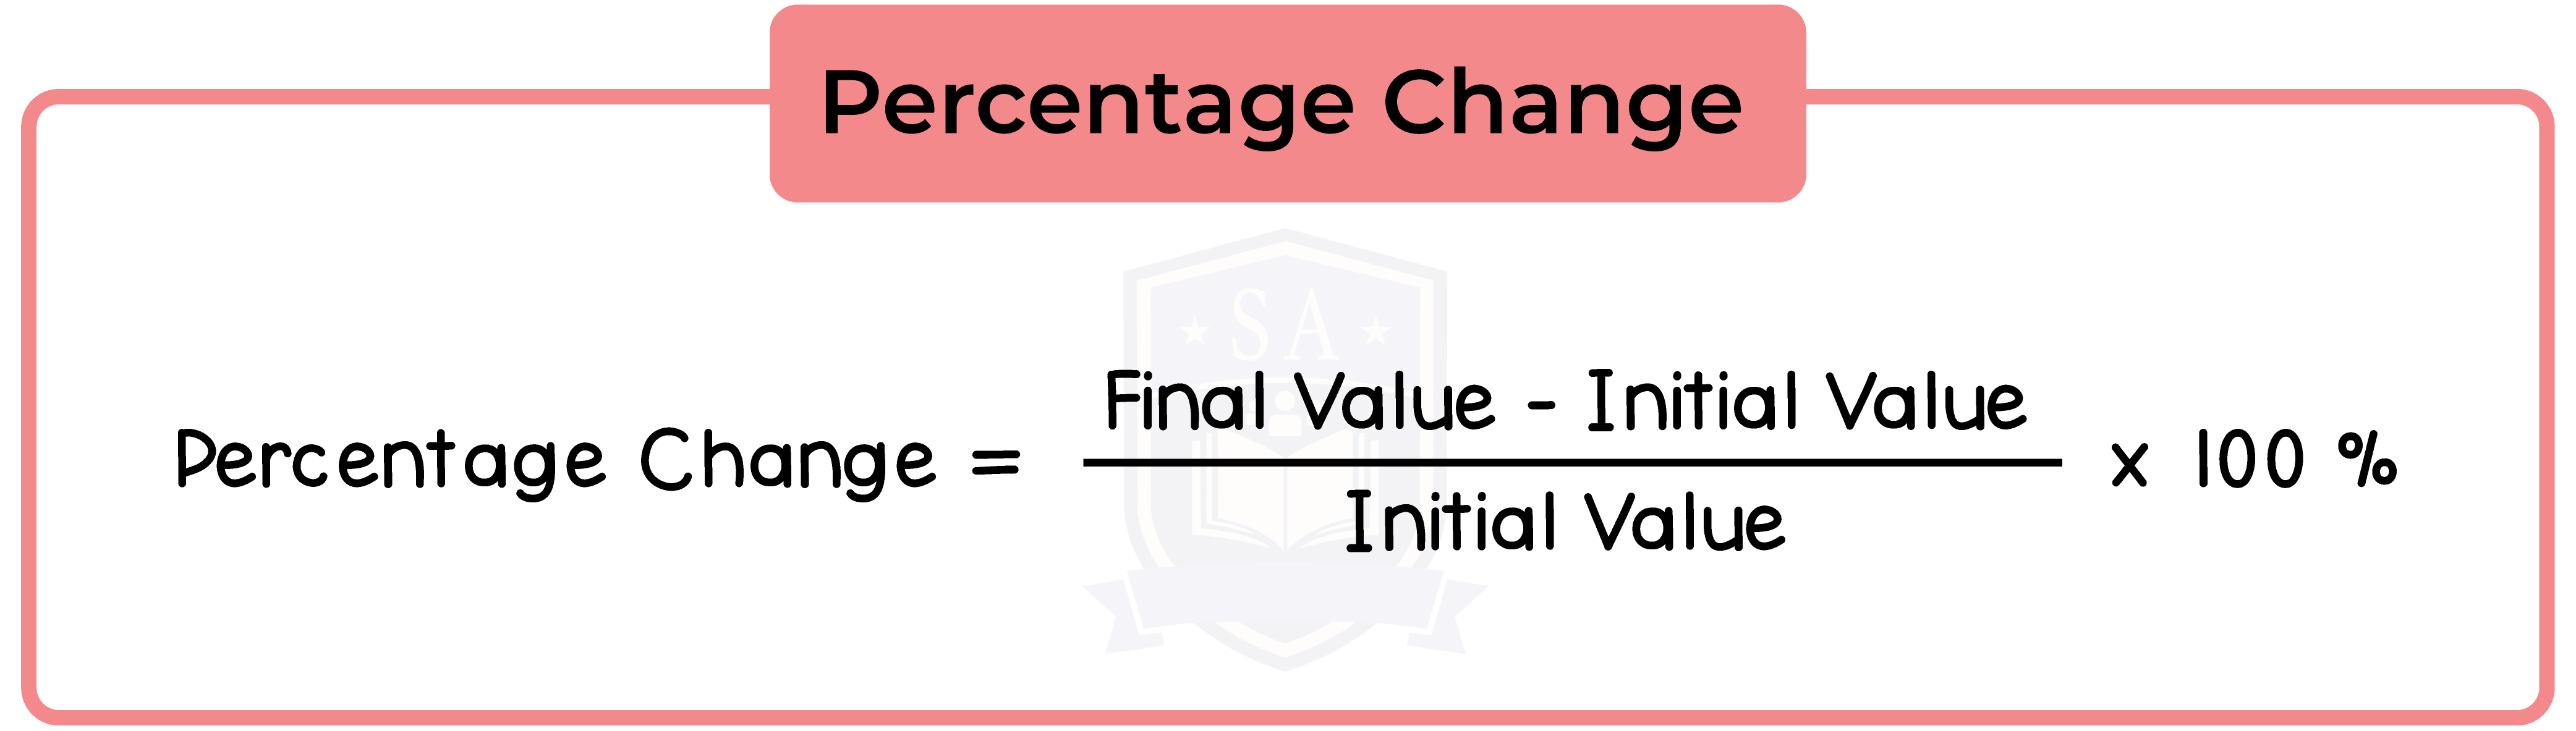 edexcel_igcse_mathematics a_topic 06_percentages_003_percentage change